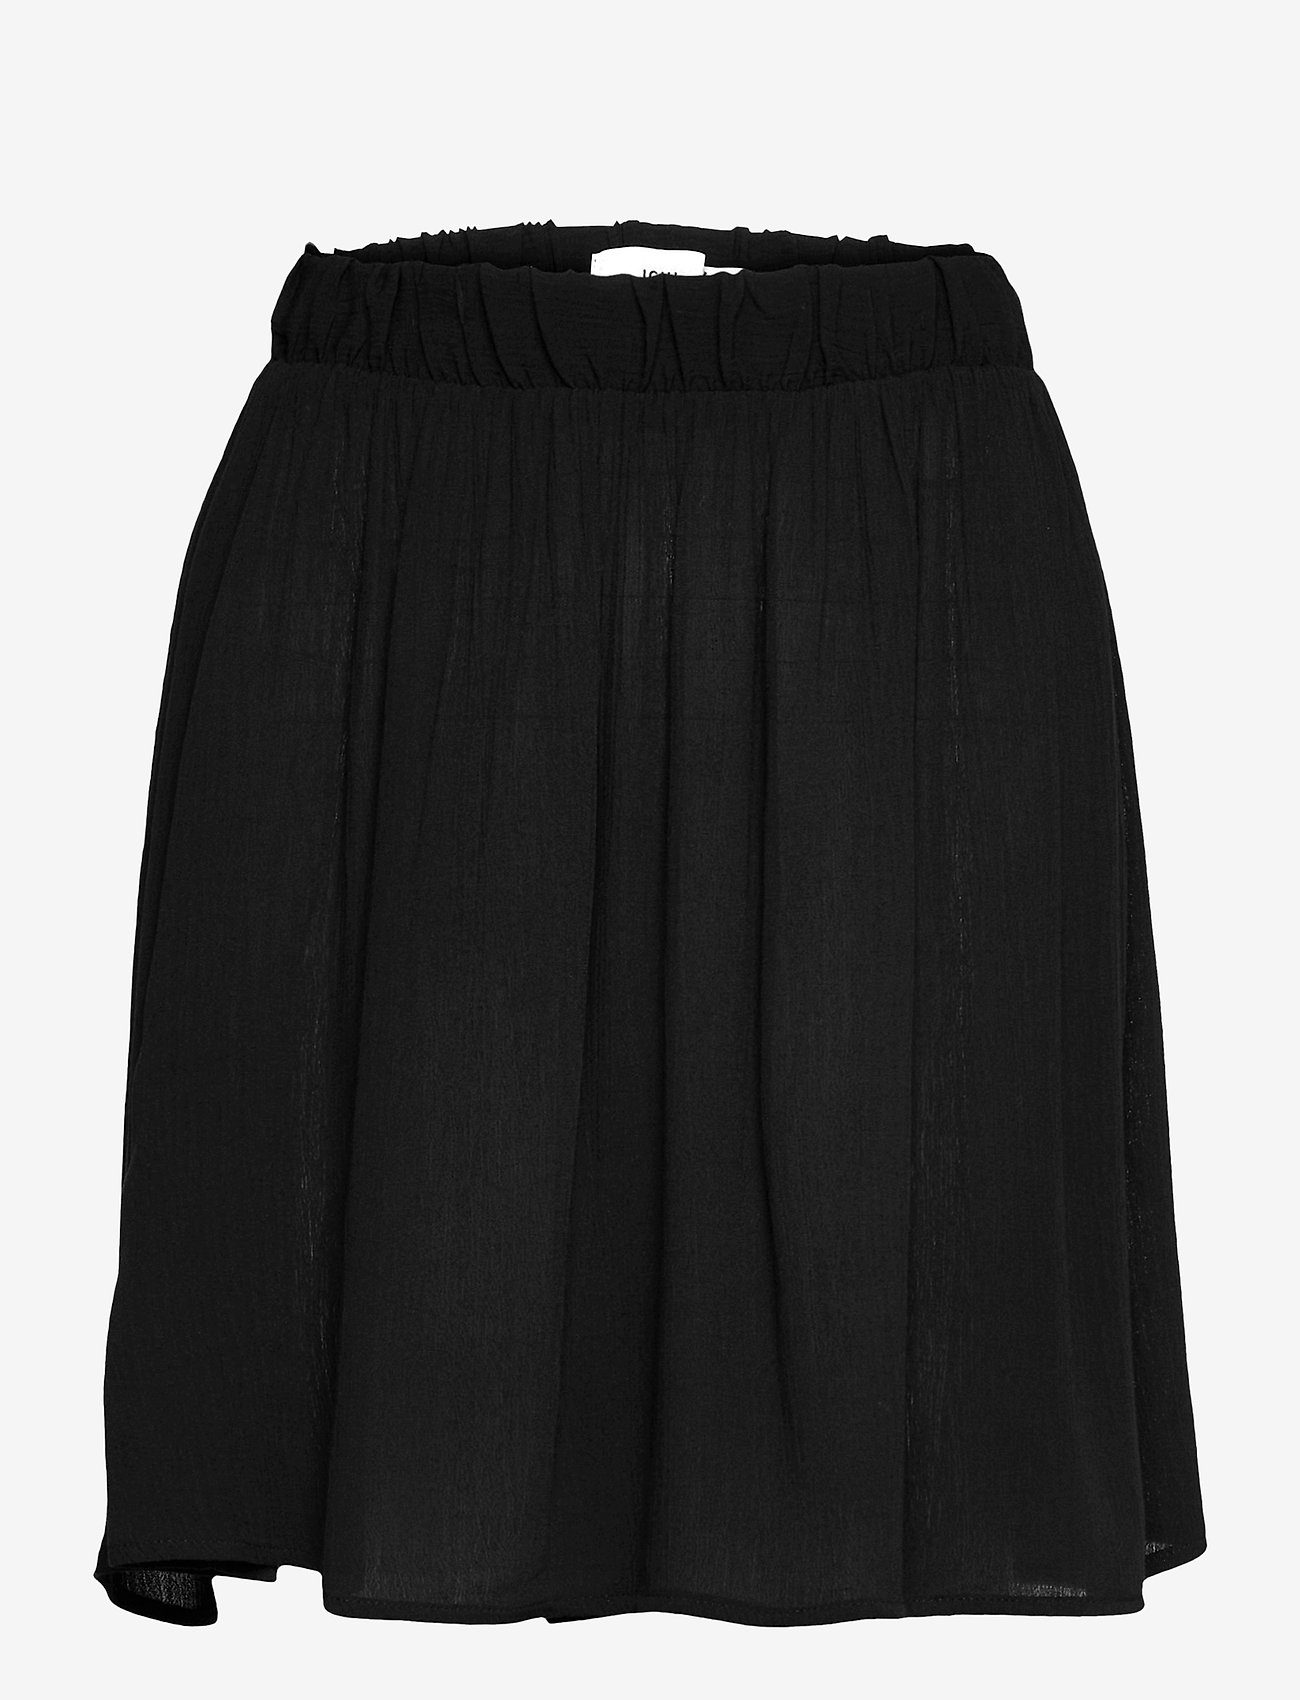 ICHI - IHMARRAKECH SO SK - short skirts - black - 1